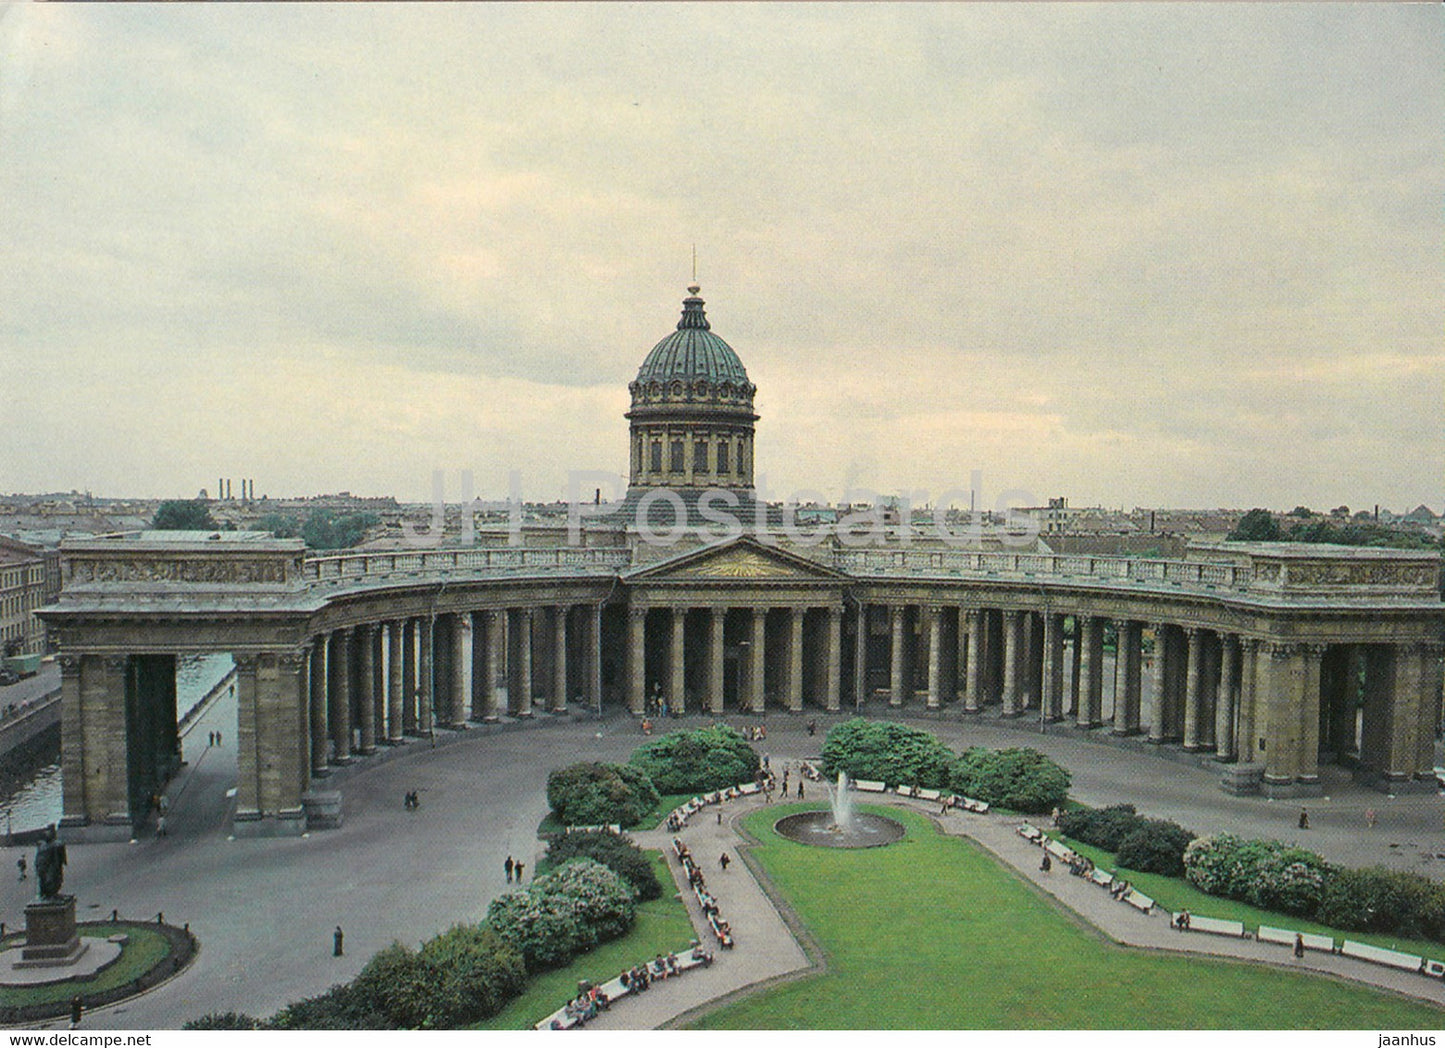 Leningrad - St Petersburg - The Kazan Cathedral - Russia USSR - unused - JH Postcards